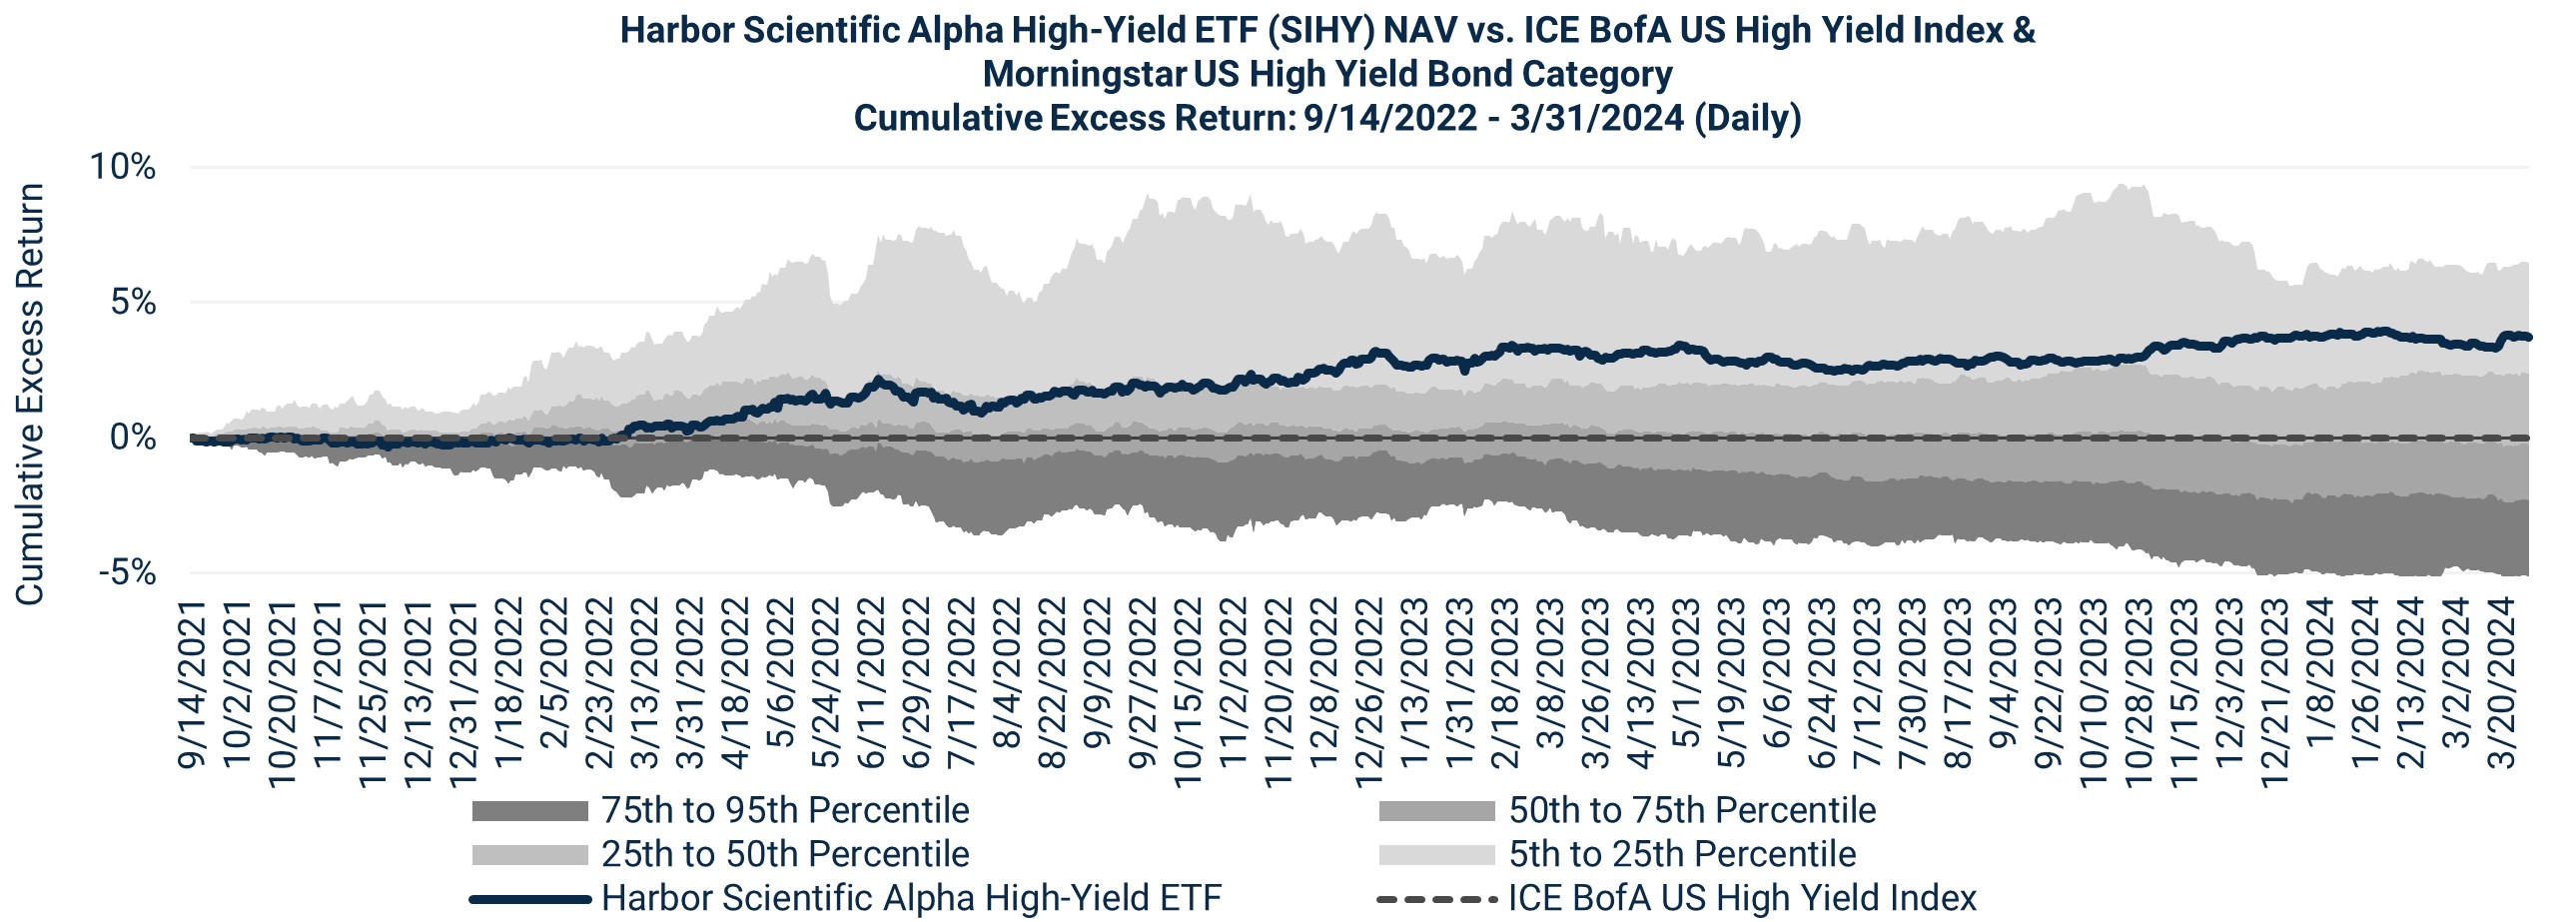 Harbor Scientific Alpha High-Yield ETF (SIHY) NAV vs. ICE BofA US High Yield Index & Morningstar US High Yield Bond Category Cumulative Excess Return: 9/14/2022 - 3/31/2024 (Daily)